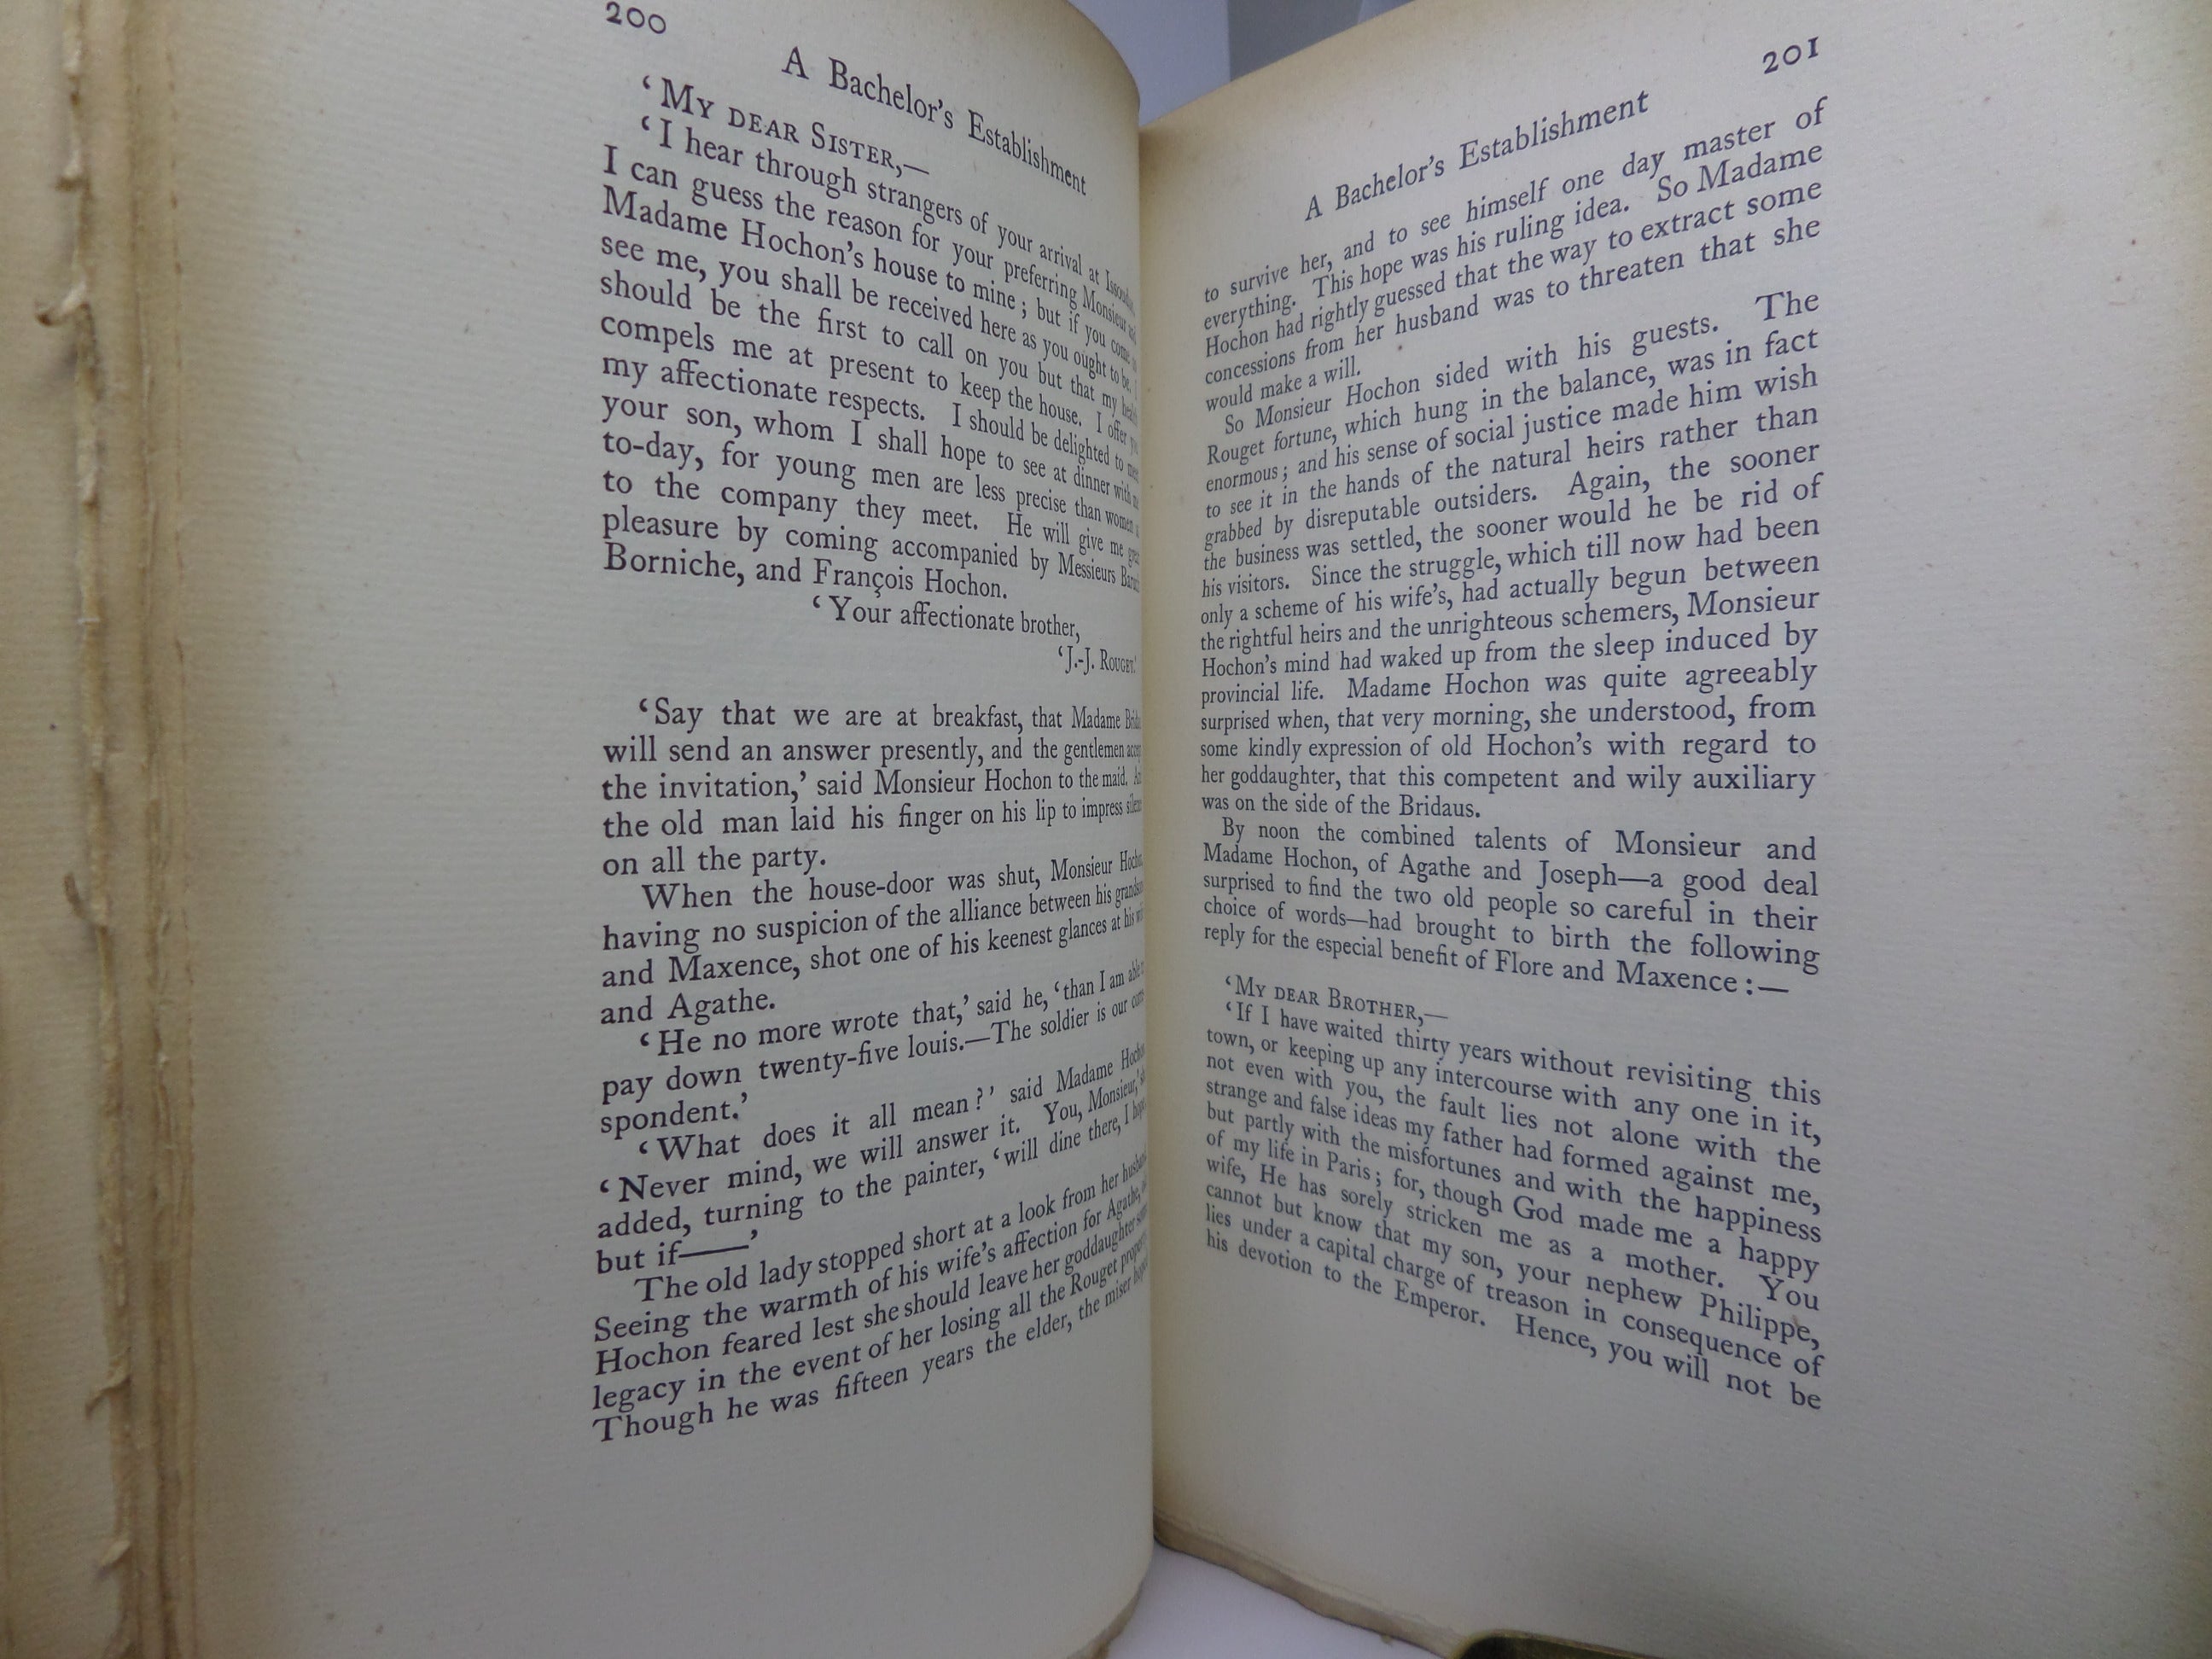 A BACHELOR'S ESTABLISHMENT BY H. DE BALZAC 1896 ILLUSTRATED LIMITED EDITION